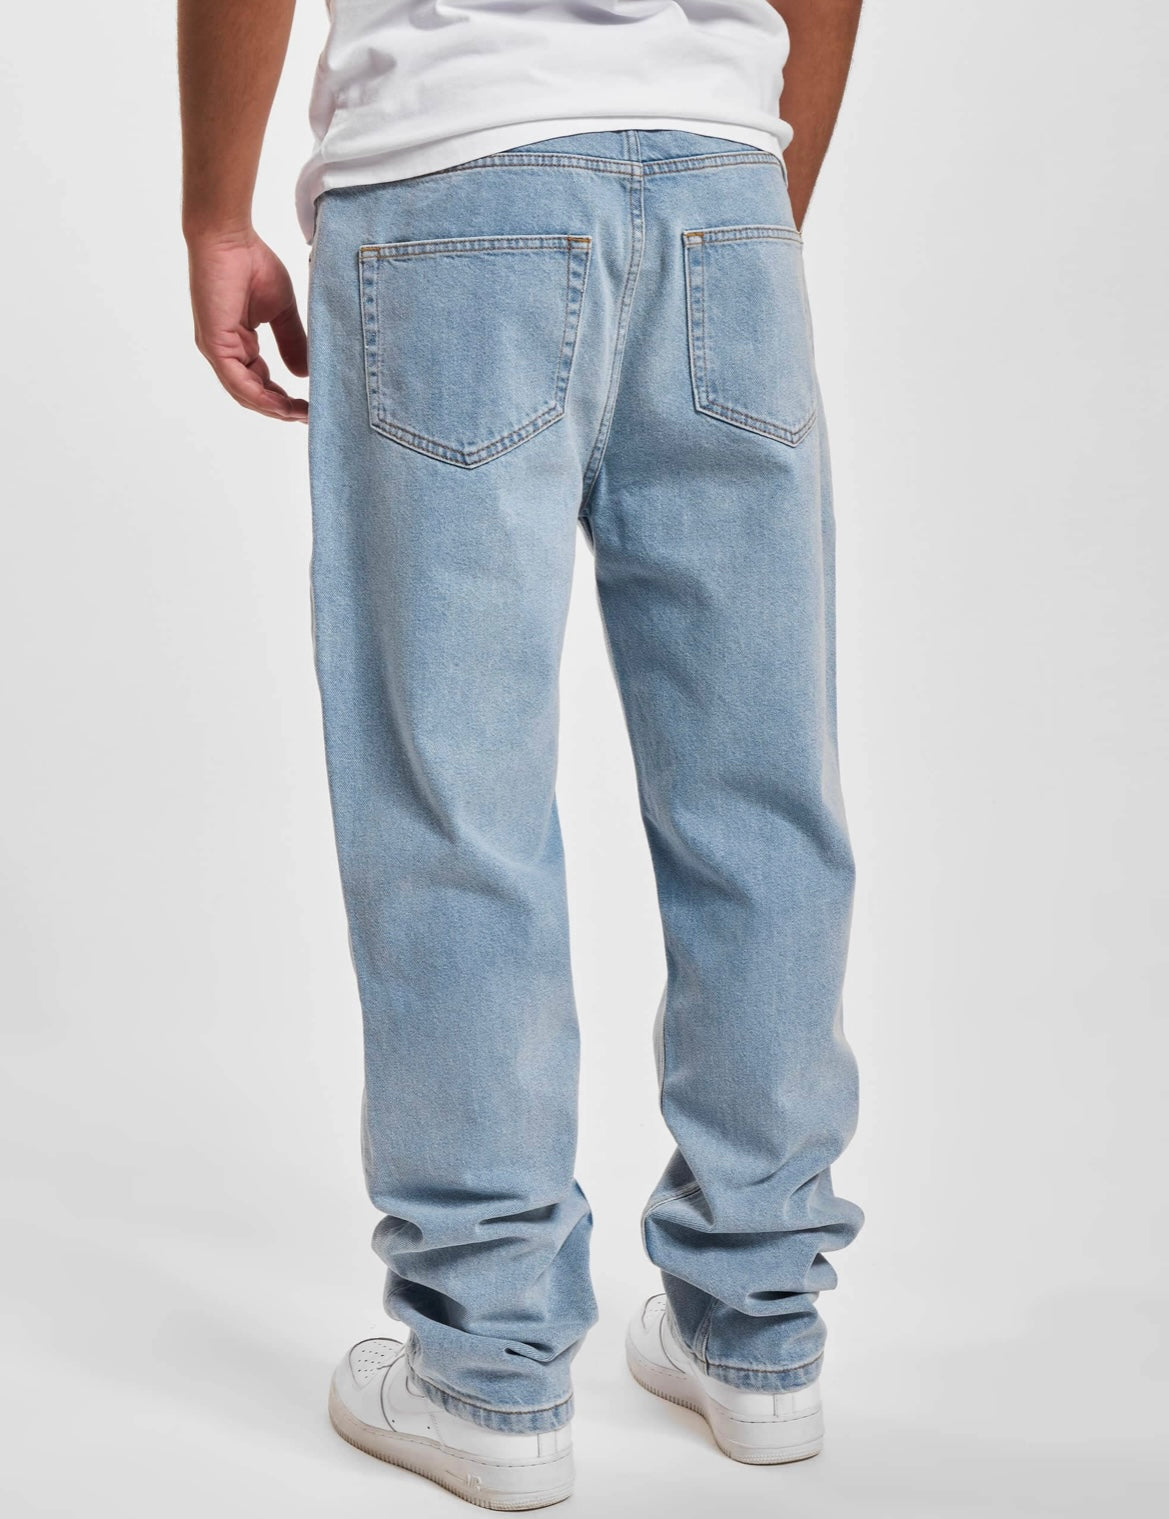 Basic blue jeans